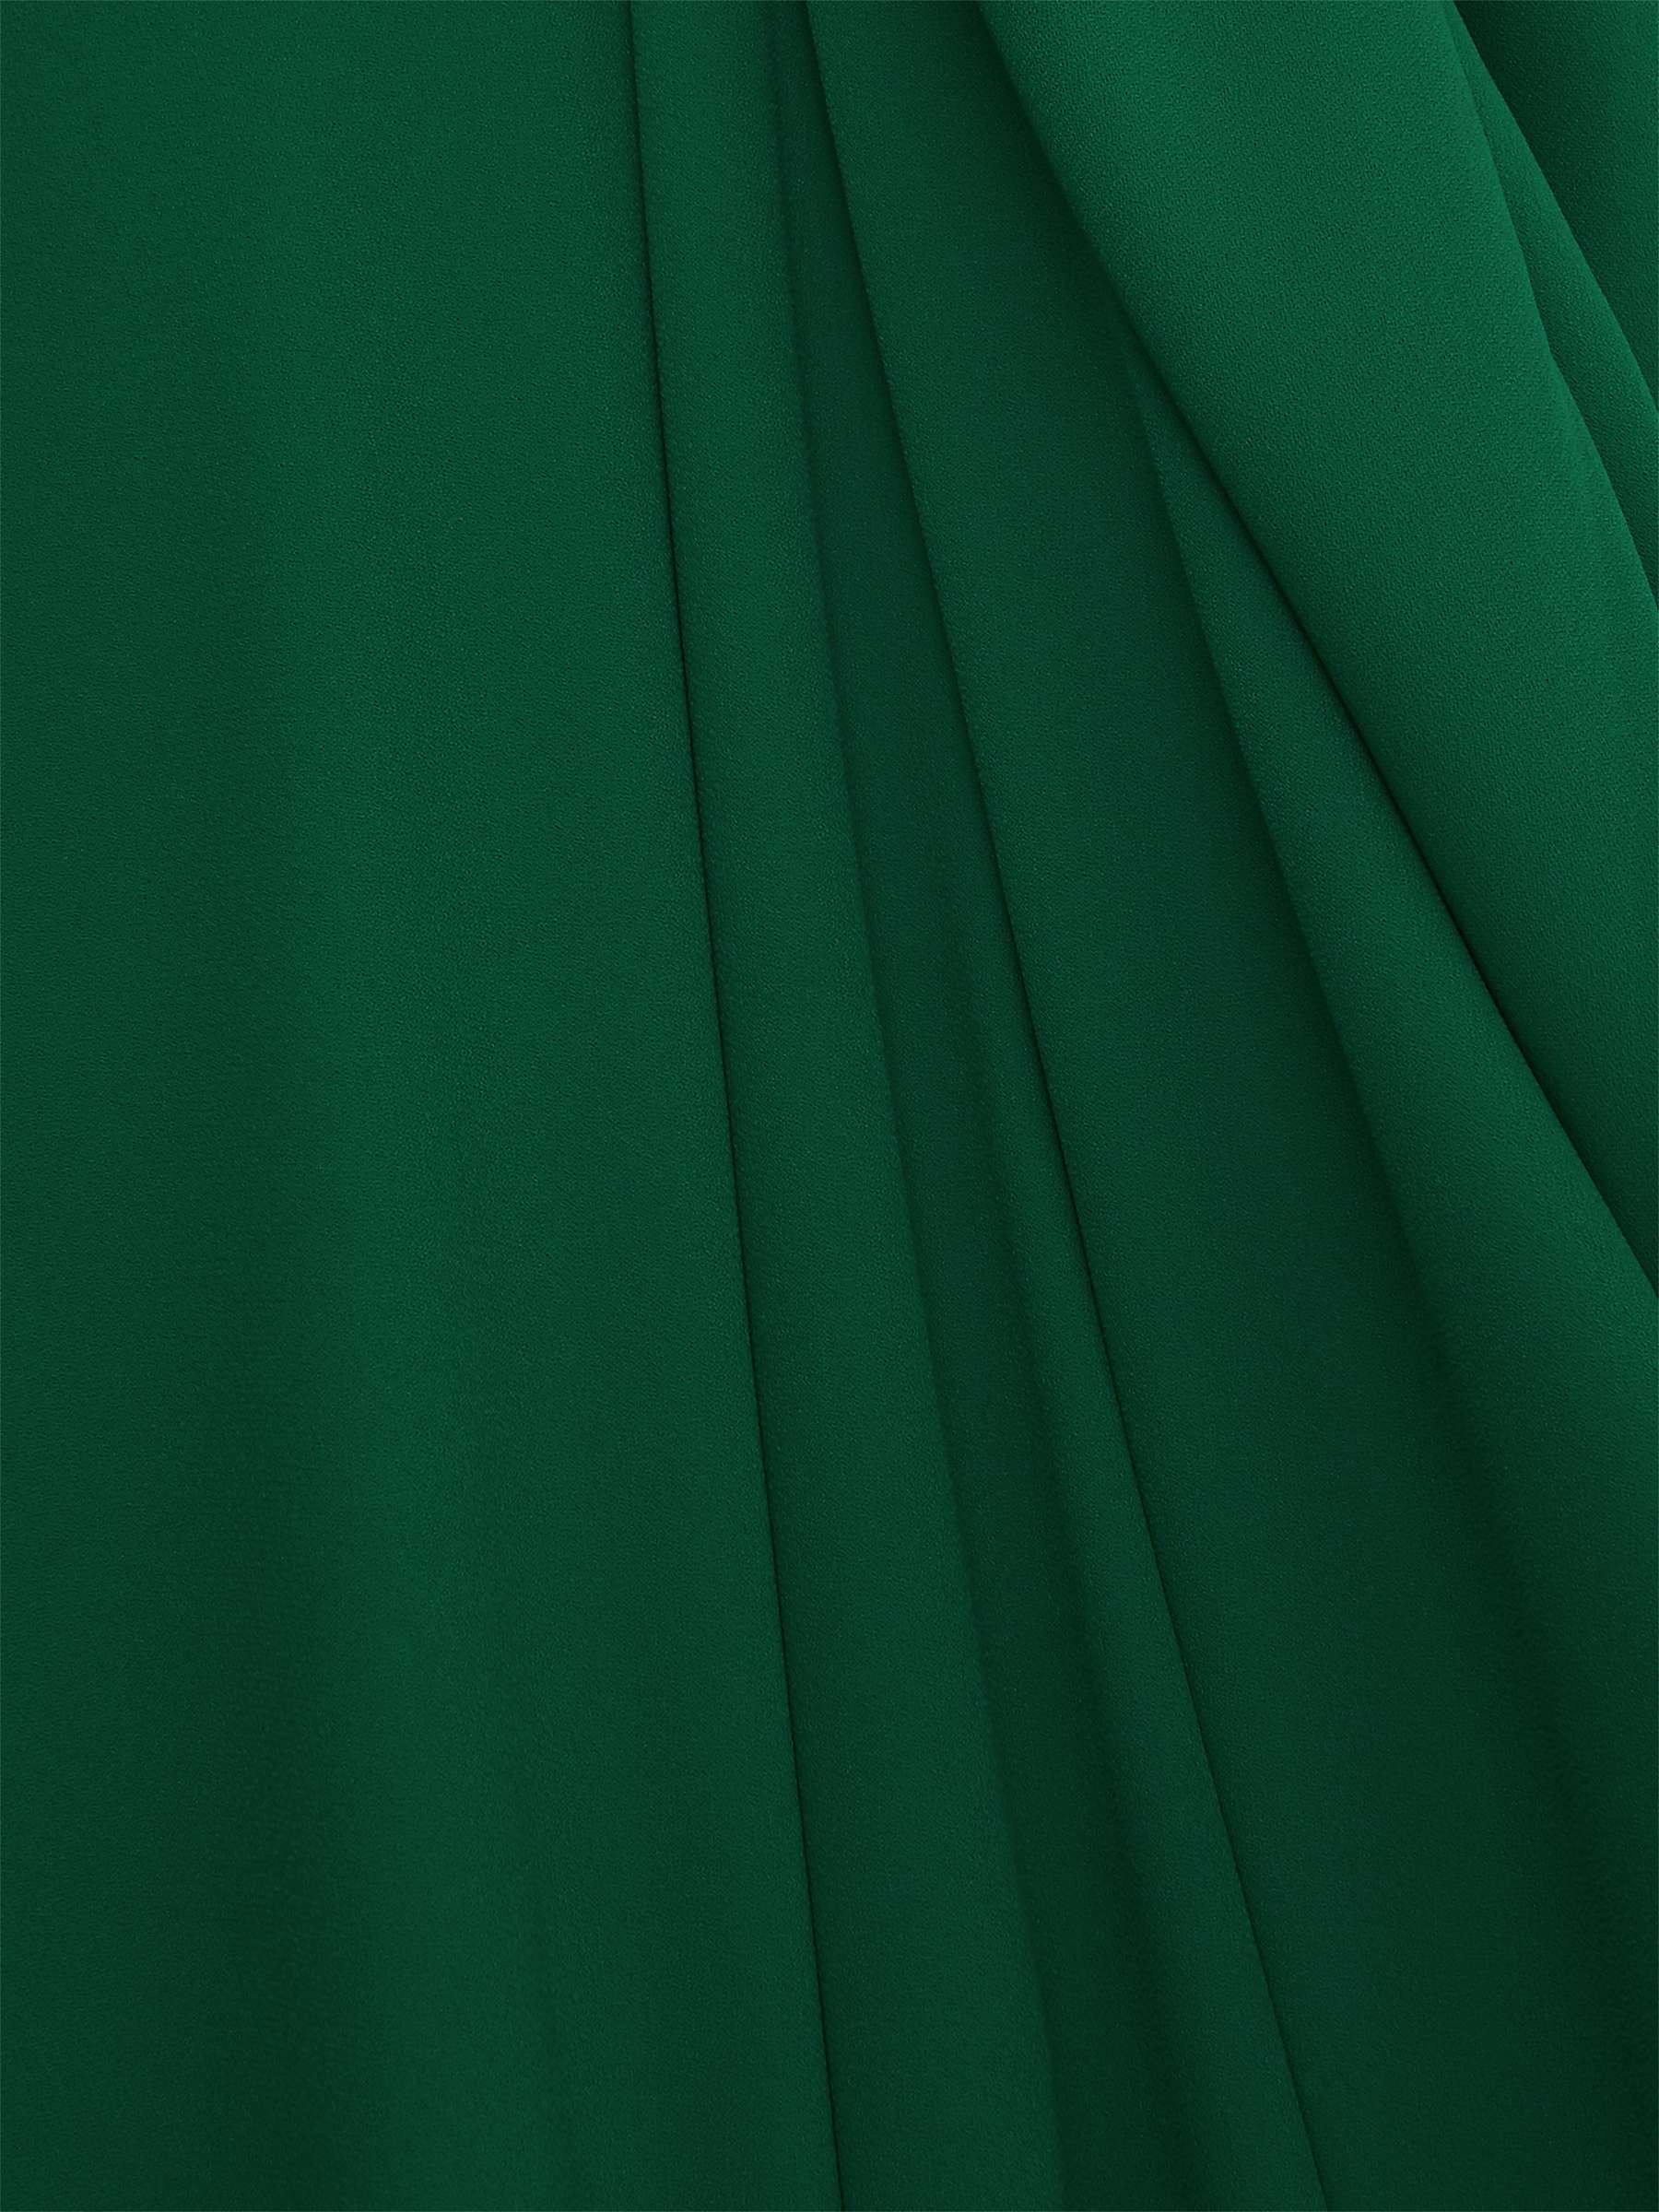 Buy Hobbs Magnolia Belted Midi Dress, Green Online at johnlewis.com